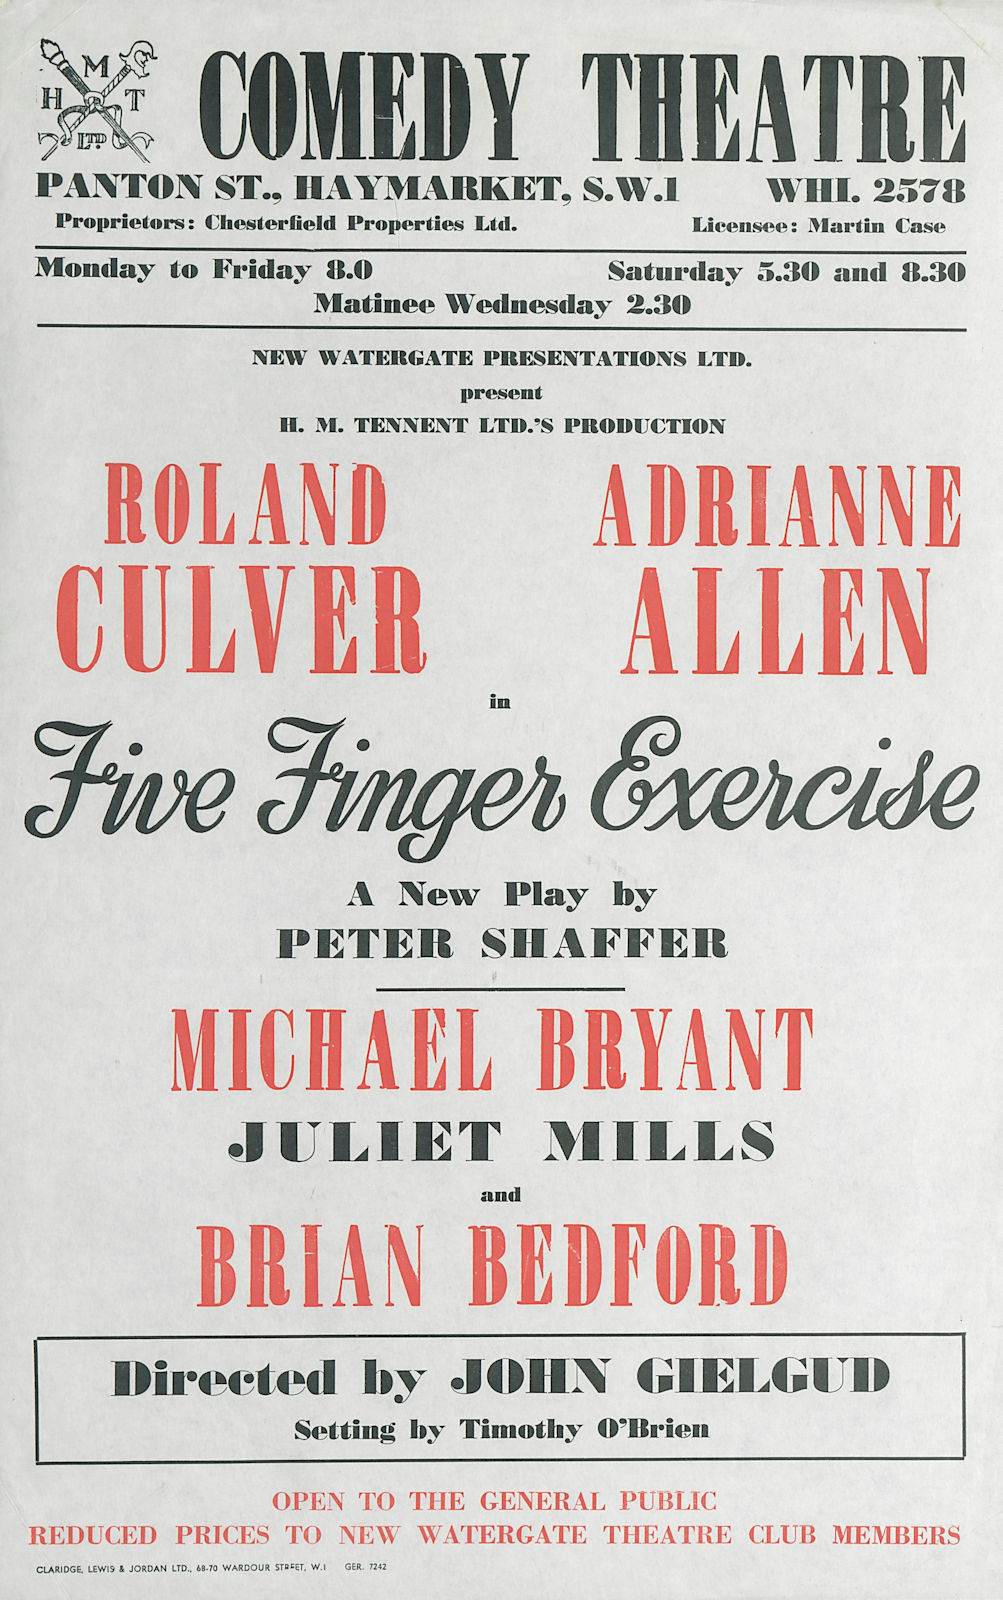 Comedy Theatre. Five Finger Exercise. John Gielgud. Shaffer. Ronald Culver 1958